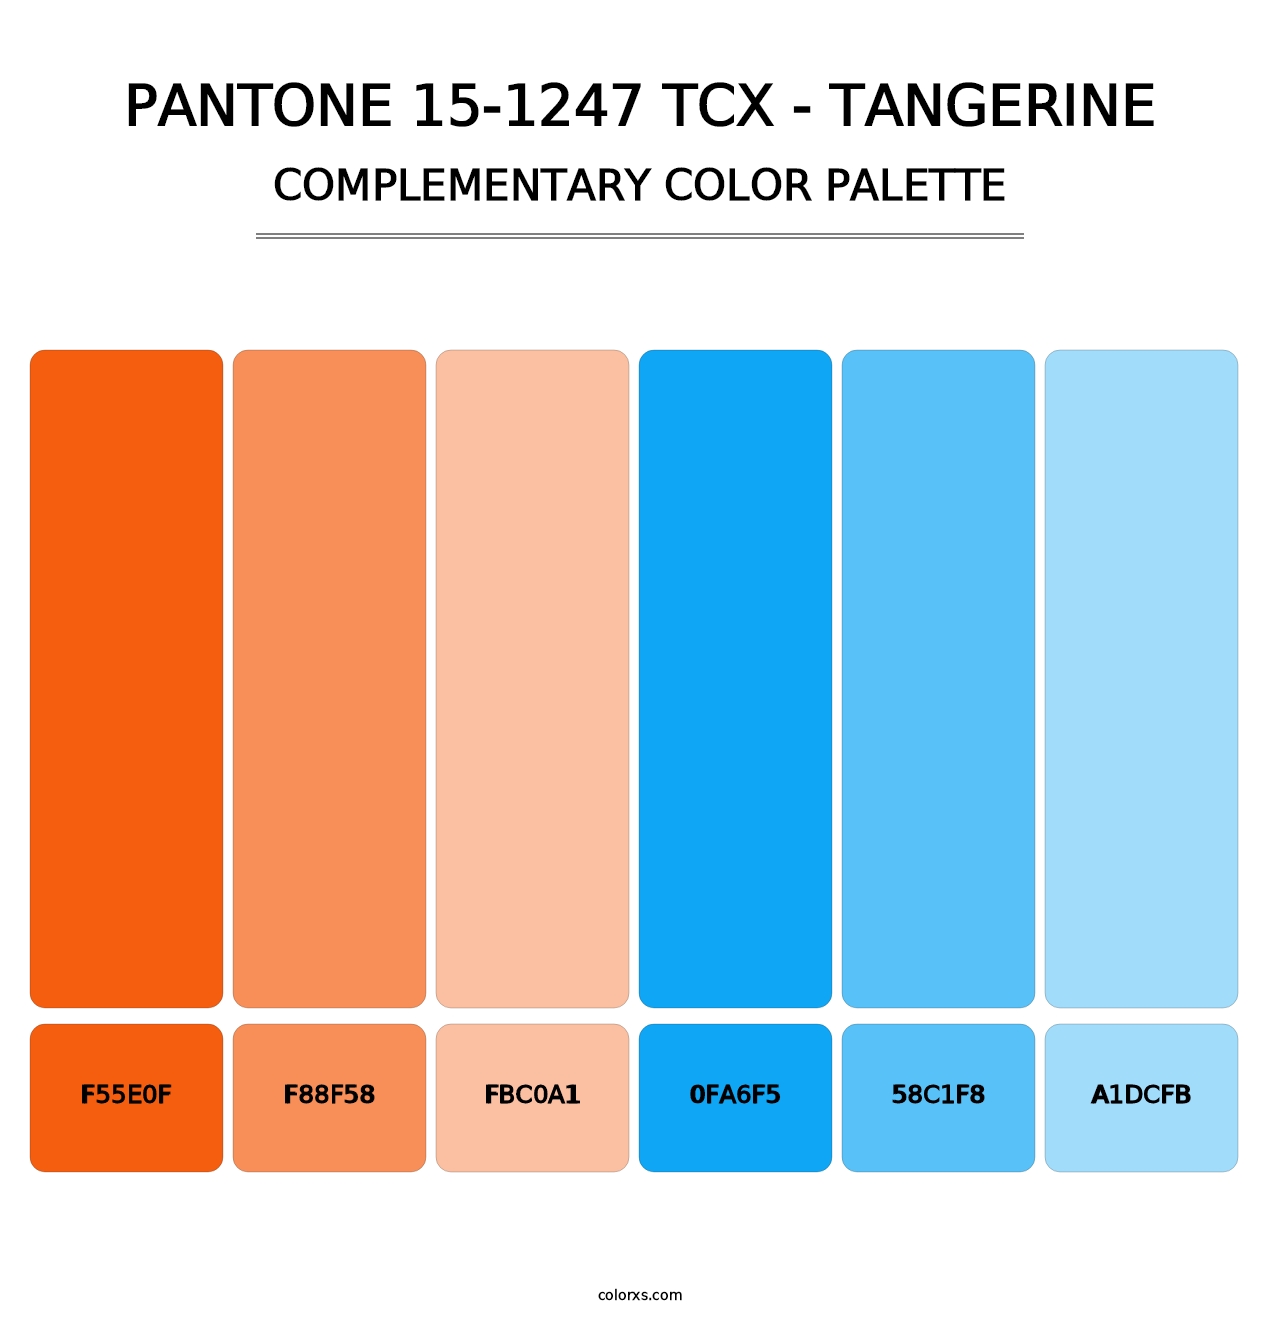 PANTONE 15-1247 TCX - Tangerine - Complementary Color Palette